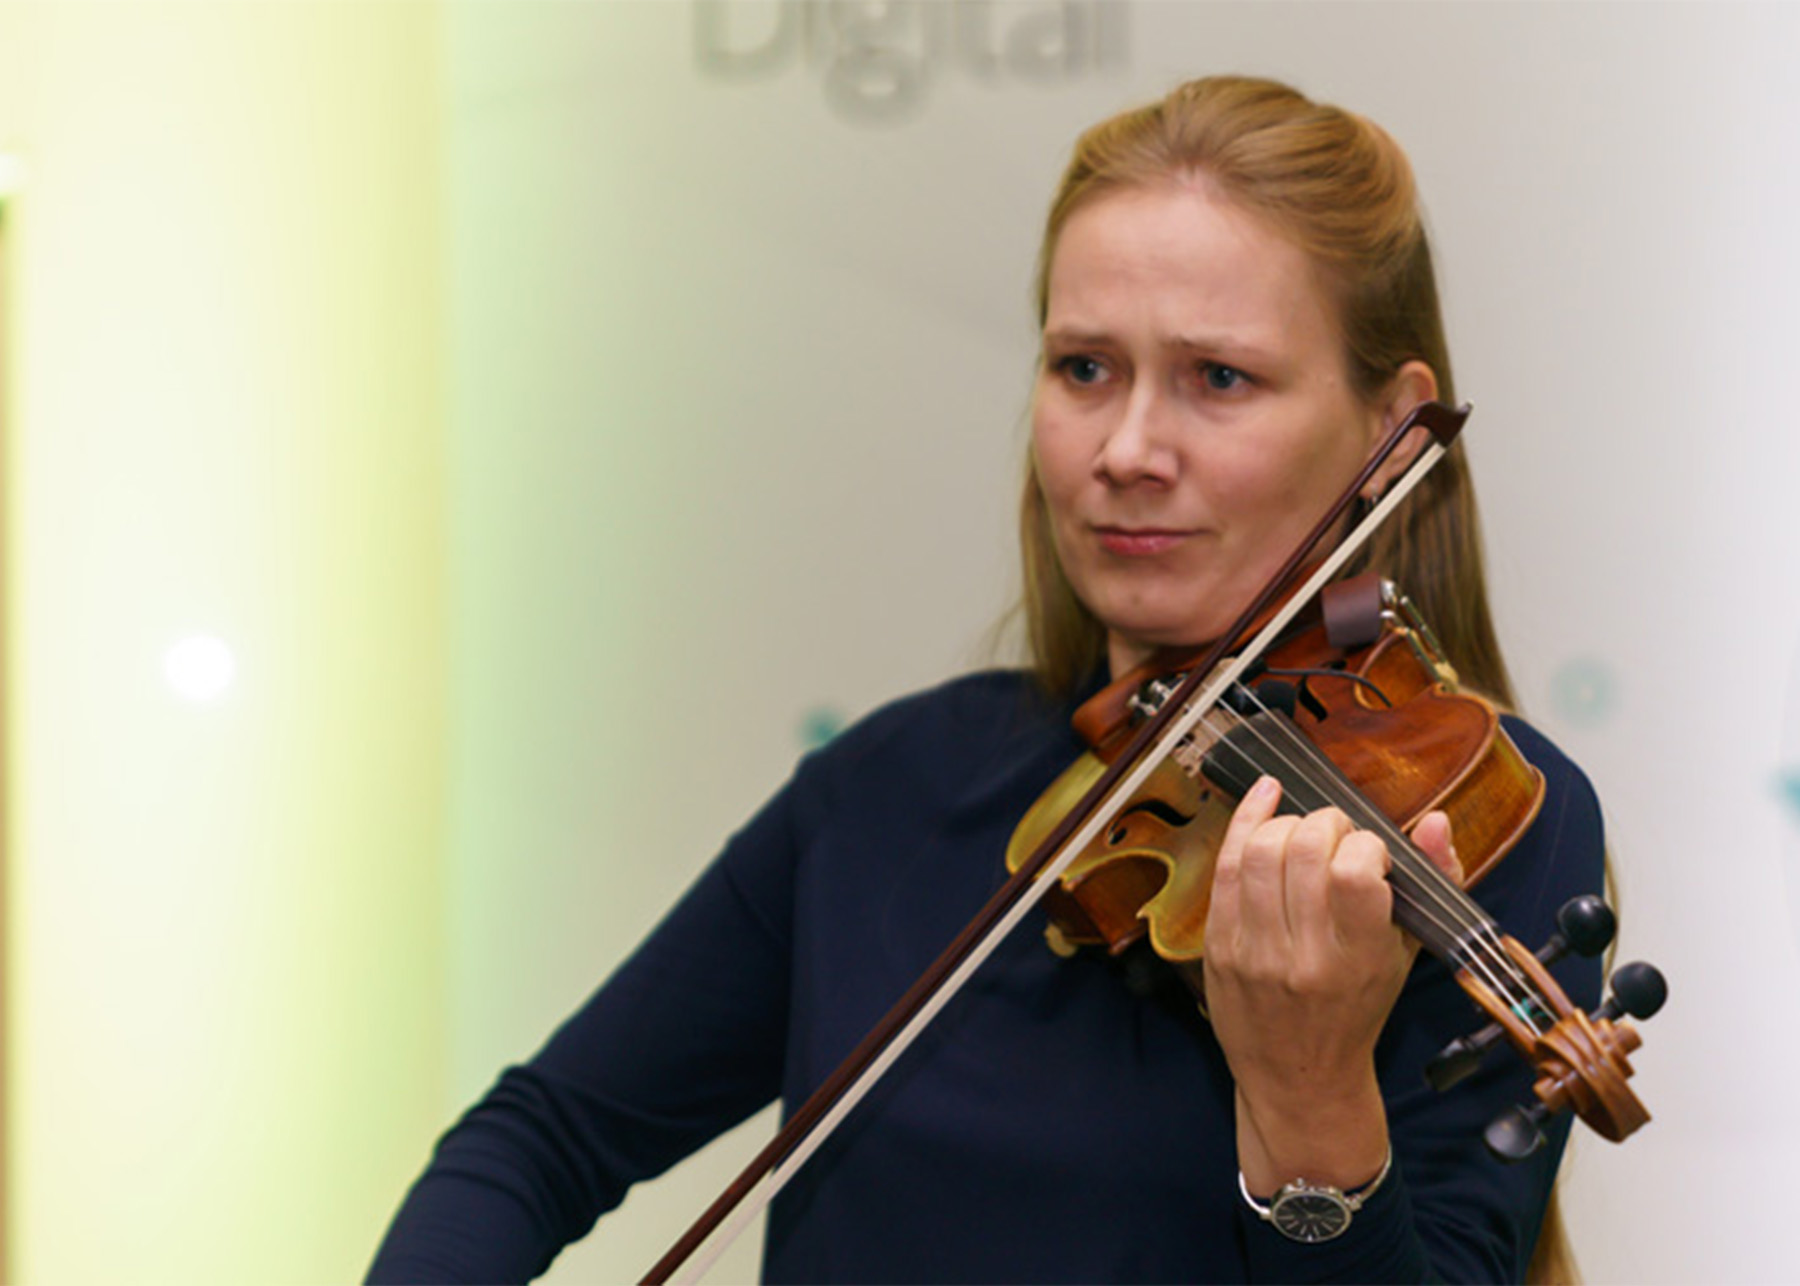 Close-up of a violin player